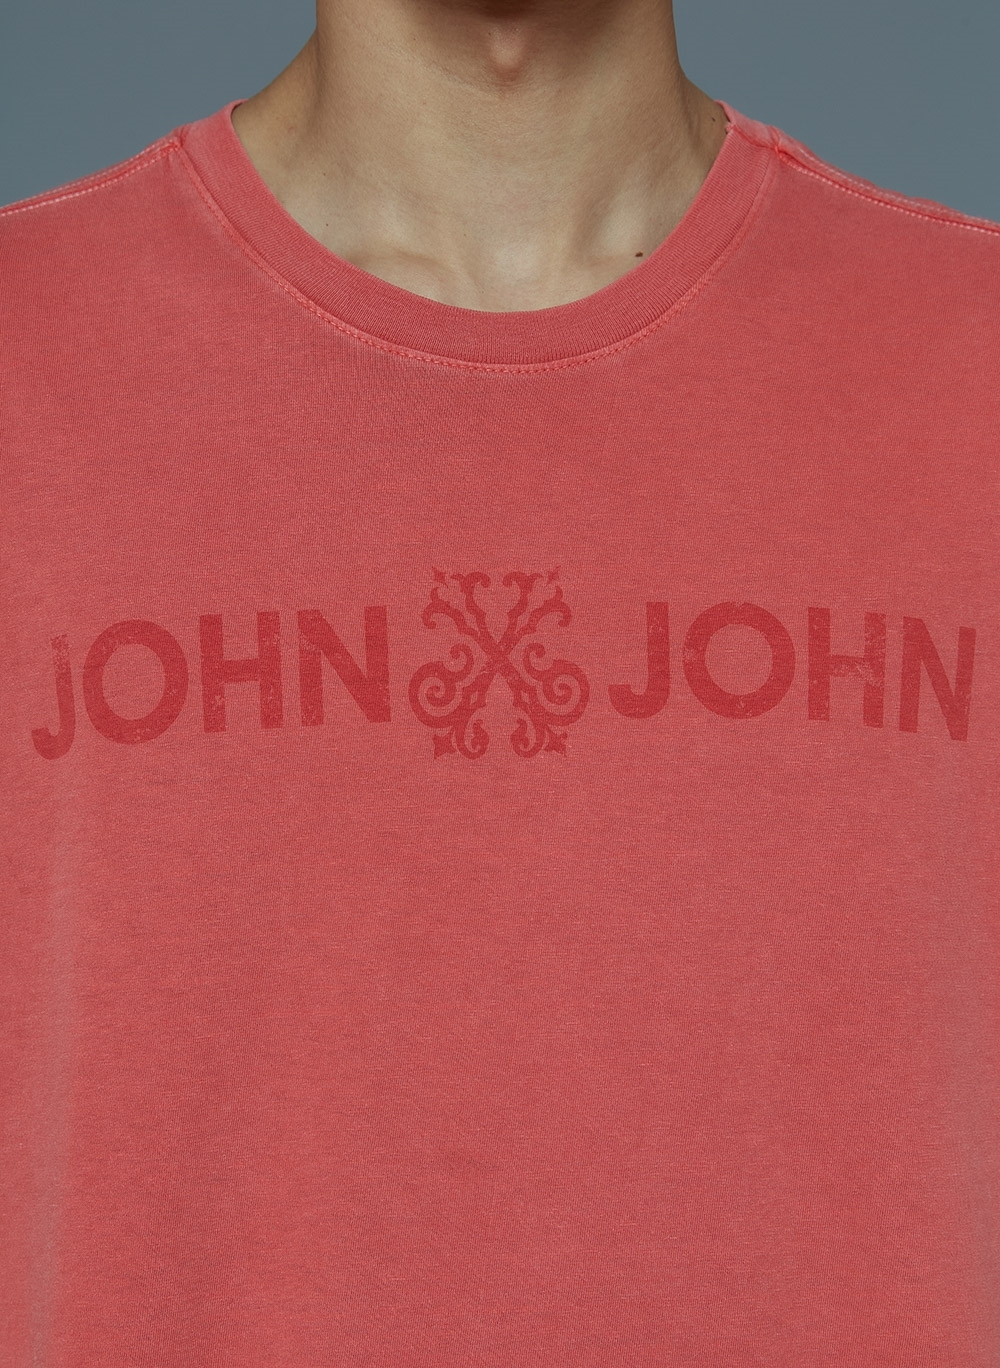 Camiseta John John Basic Logo Masculina